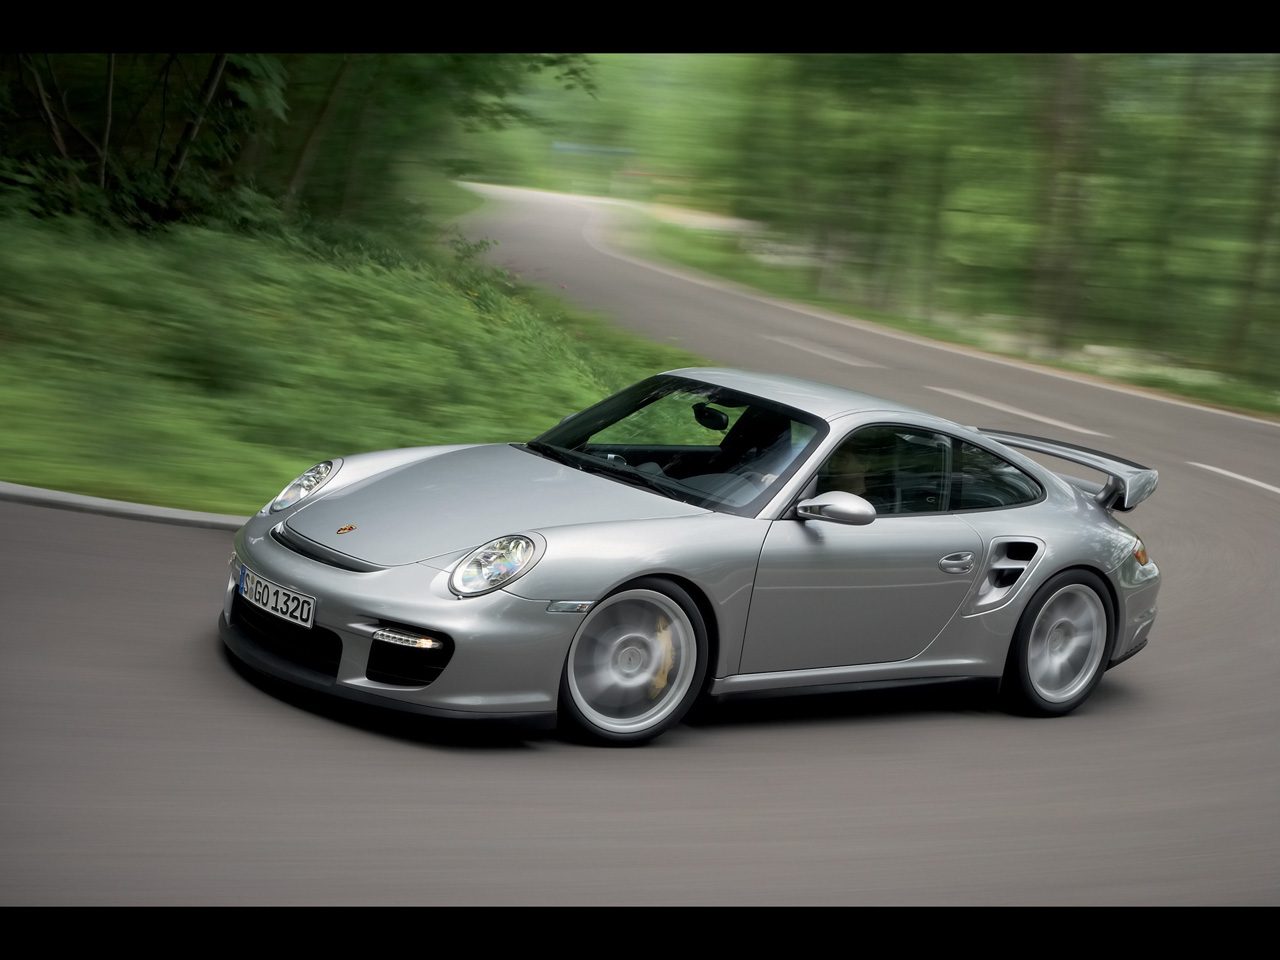 2008-Porsche-911-GT2-U-Turn-Closeup-1280x960.jpg